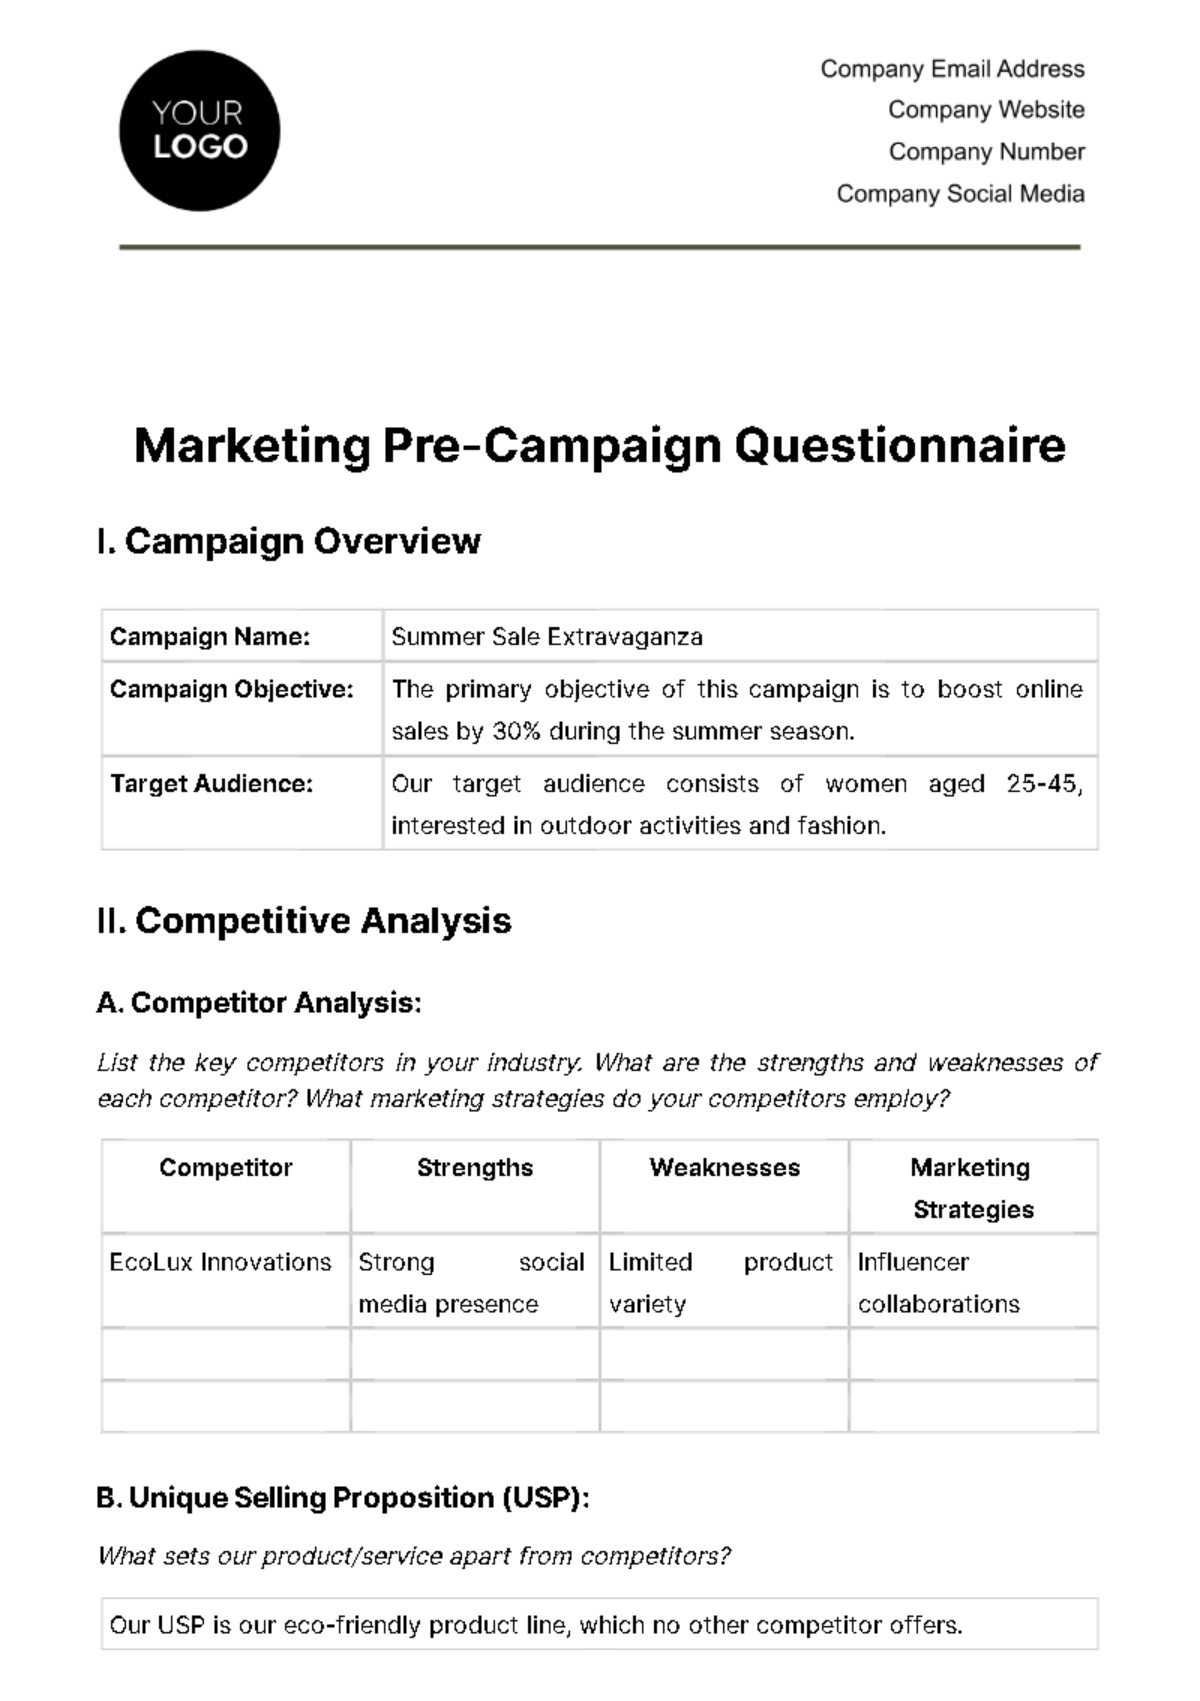 Marketing Pre-Campaign Questionnaire Template